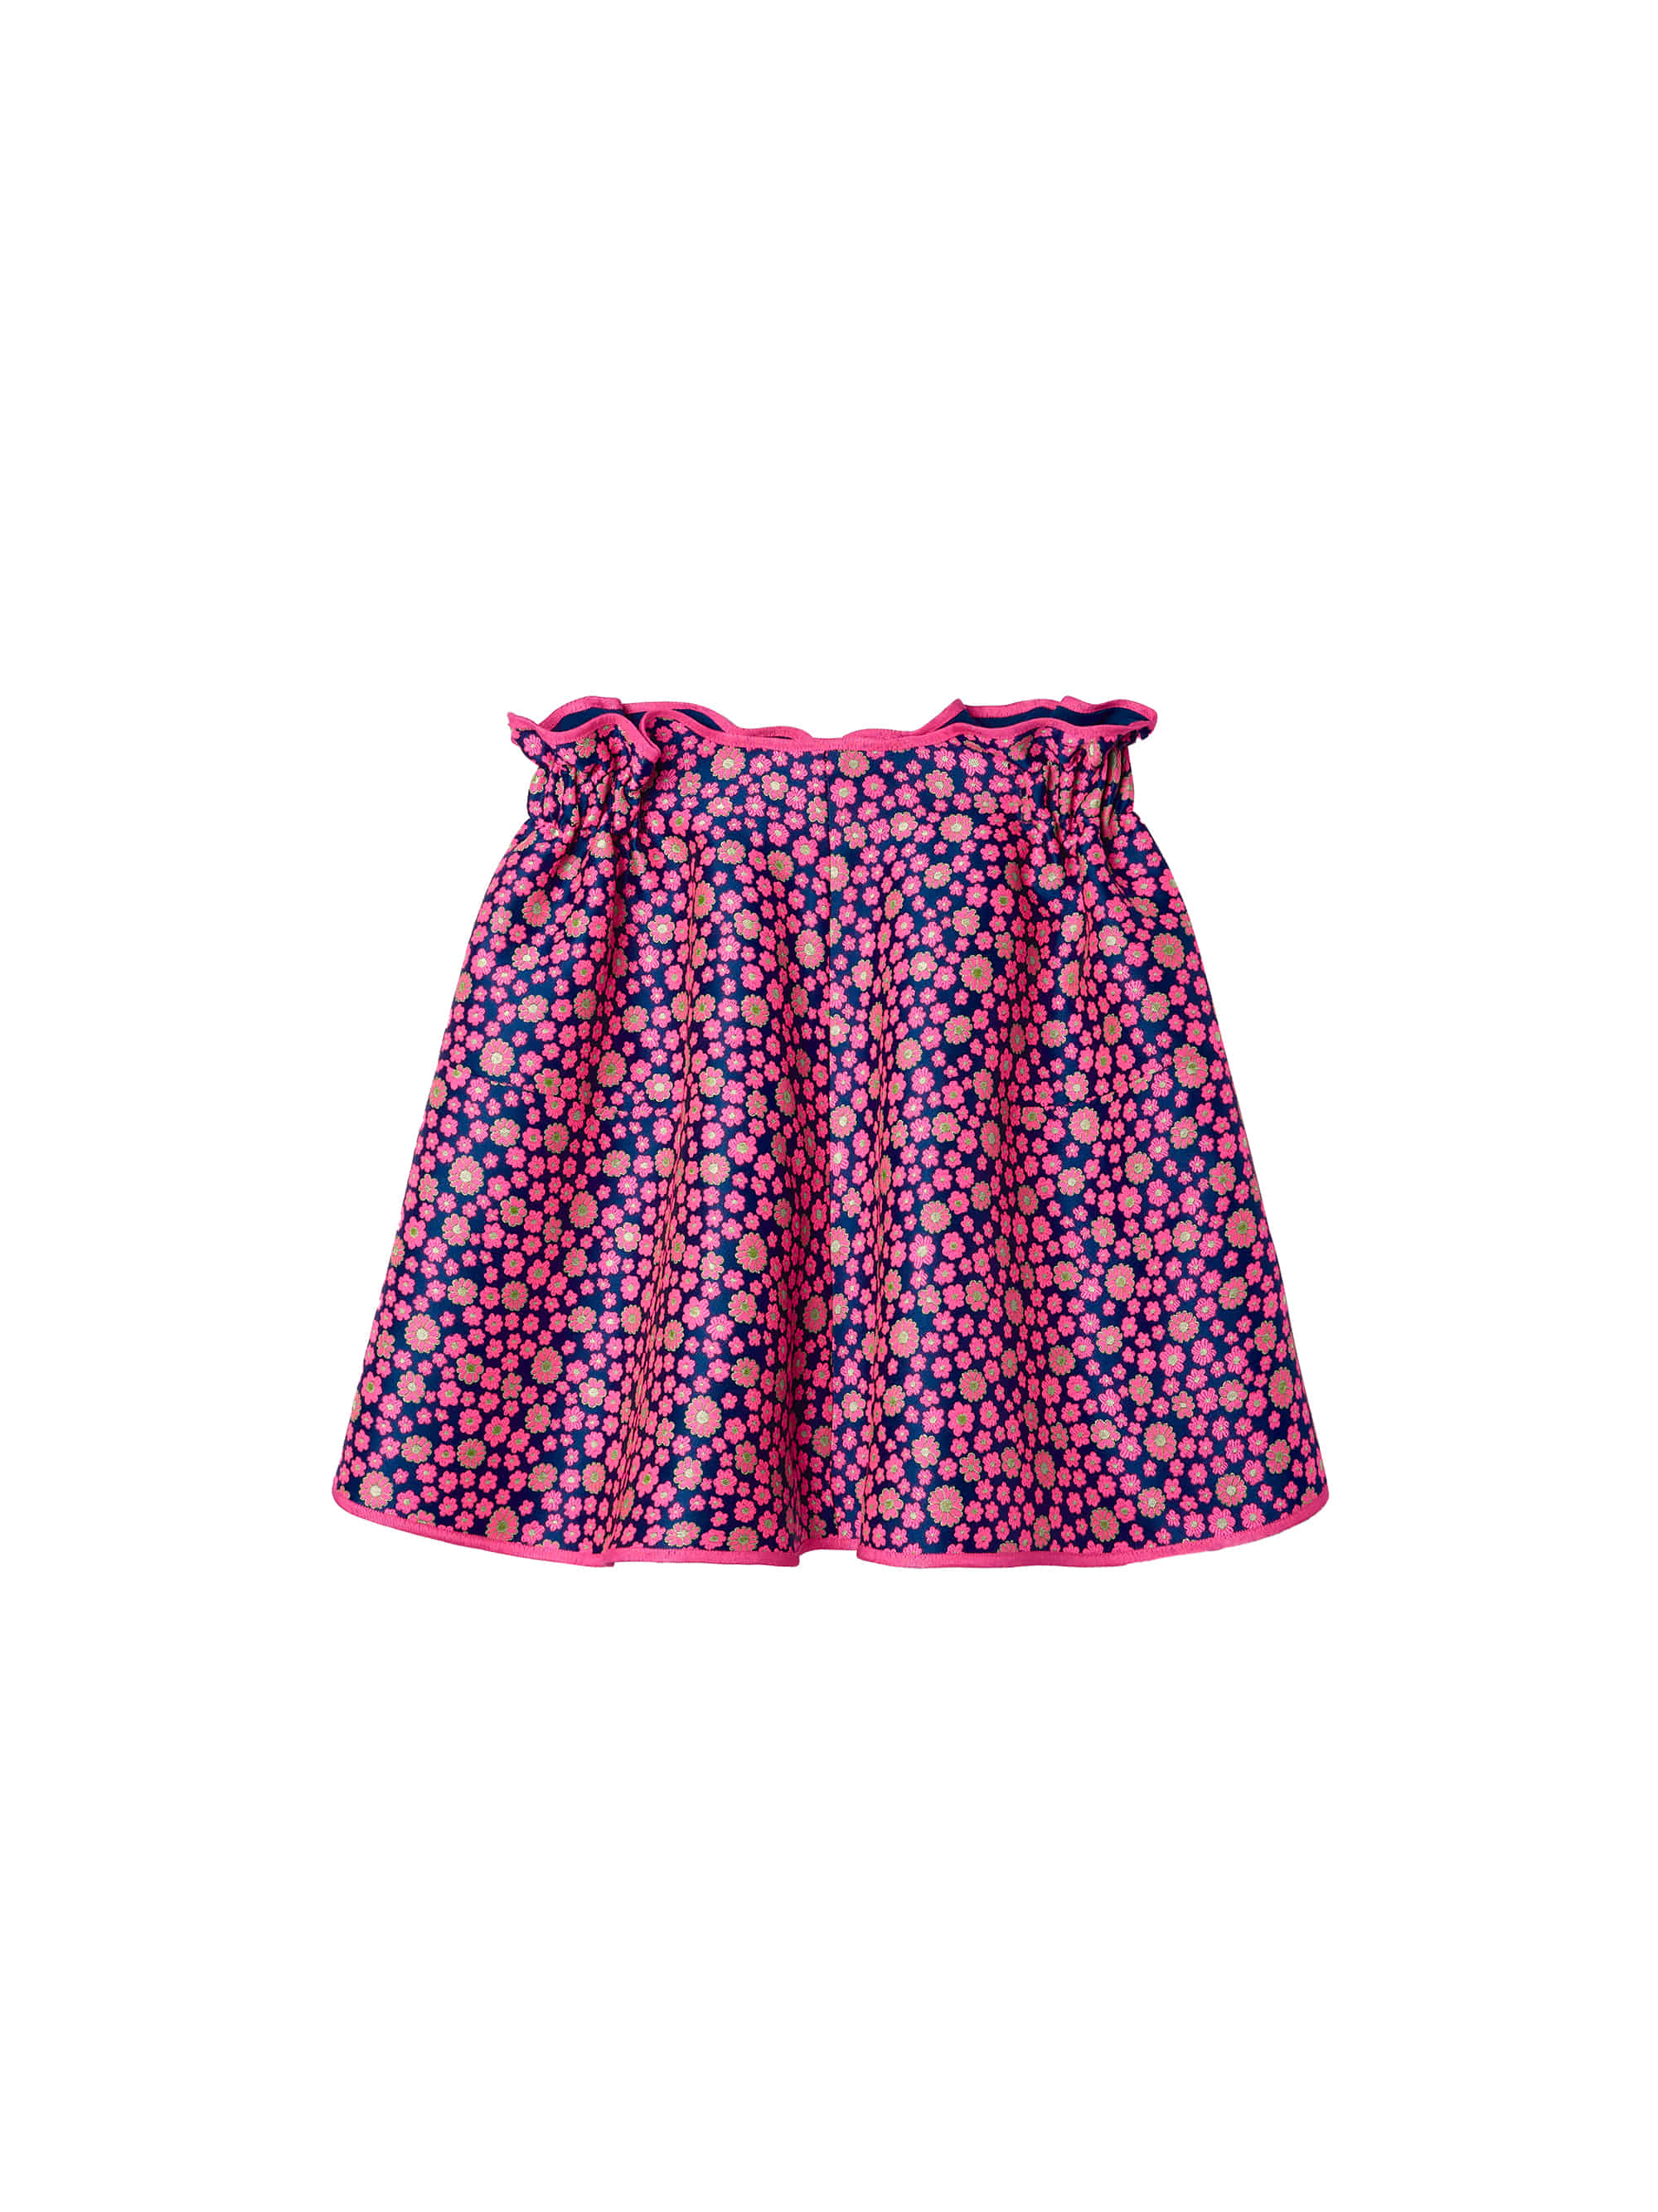 Floral Jacquard Gathered Skirt / 플로럴 자카드 개더 스커트